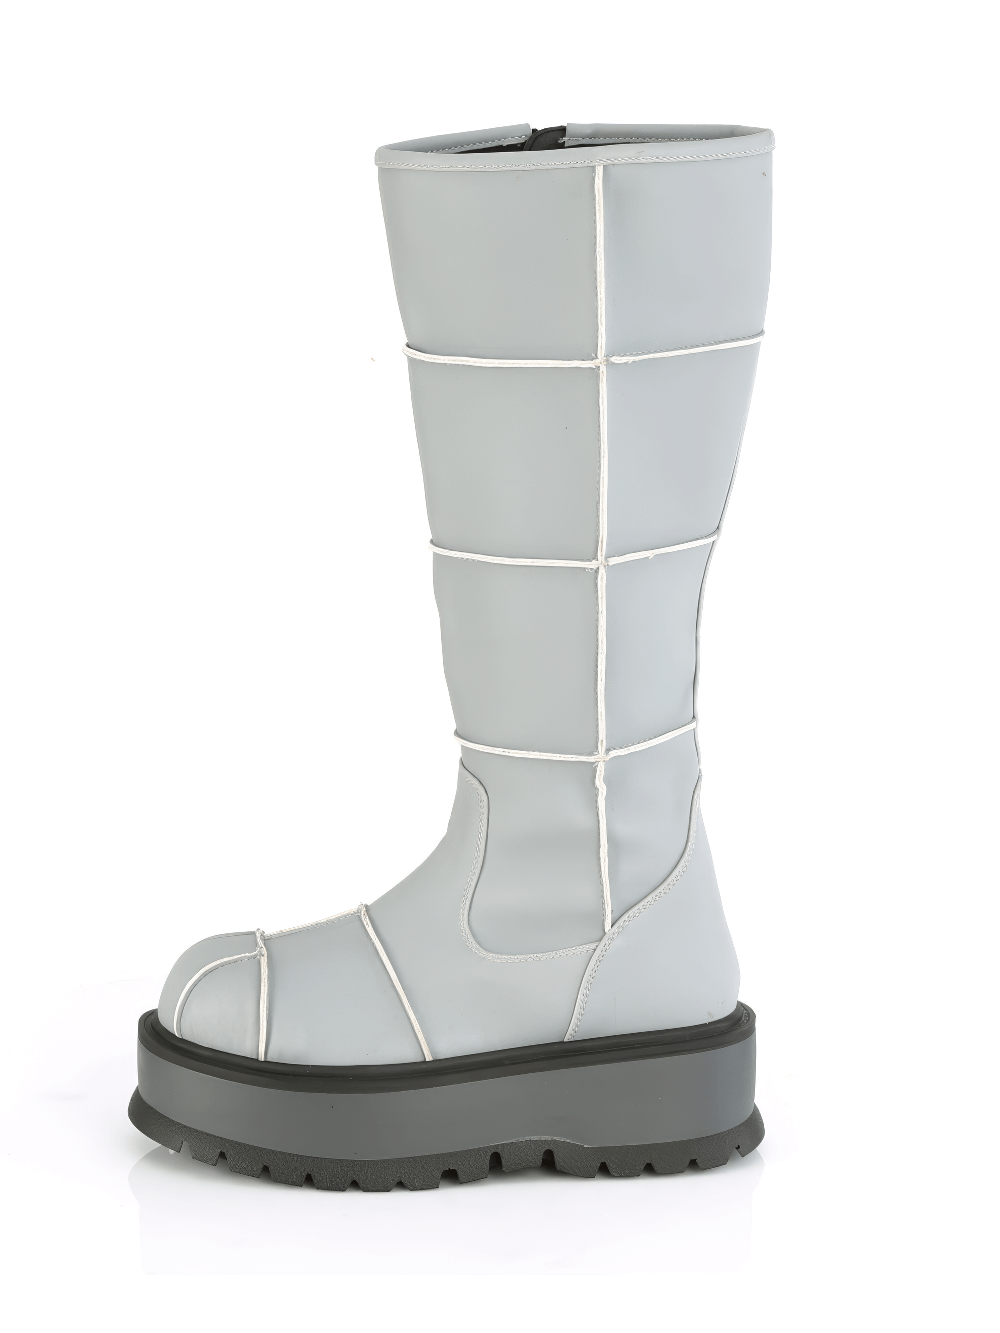 DEMONIA Women's Gray Reflective Knee-High Boots